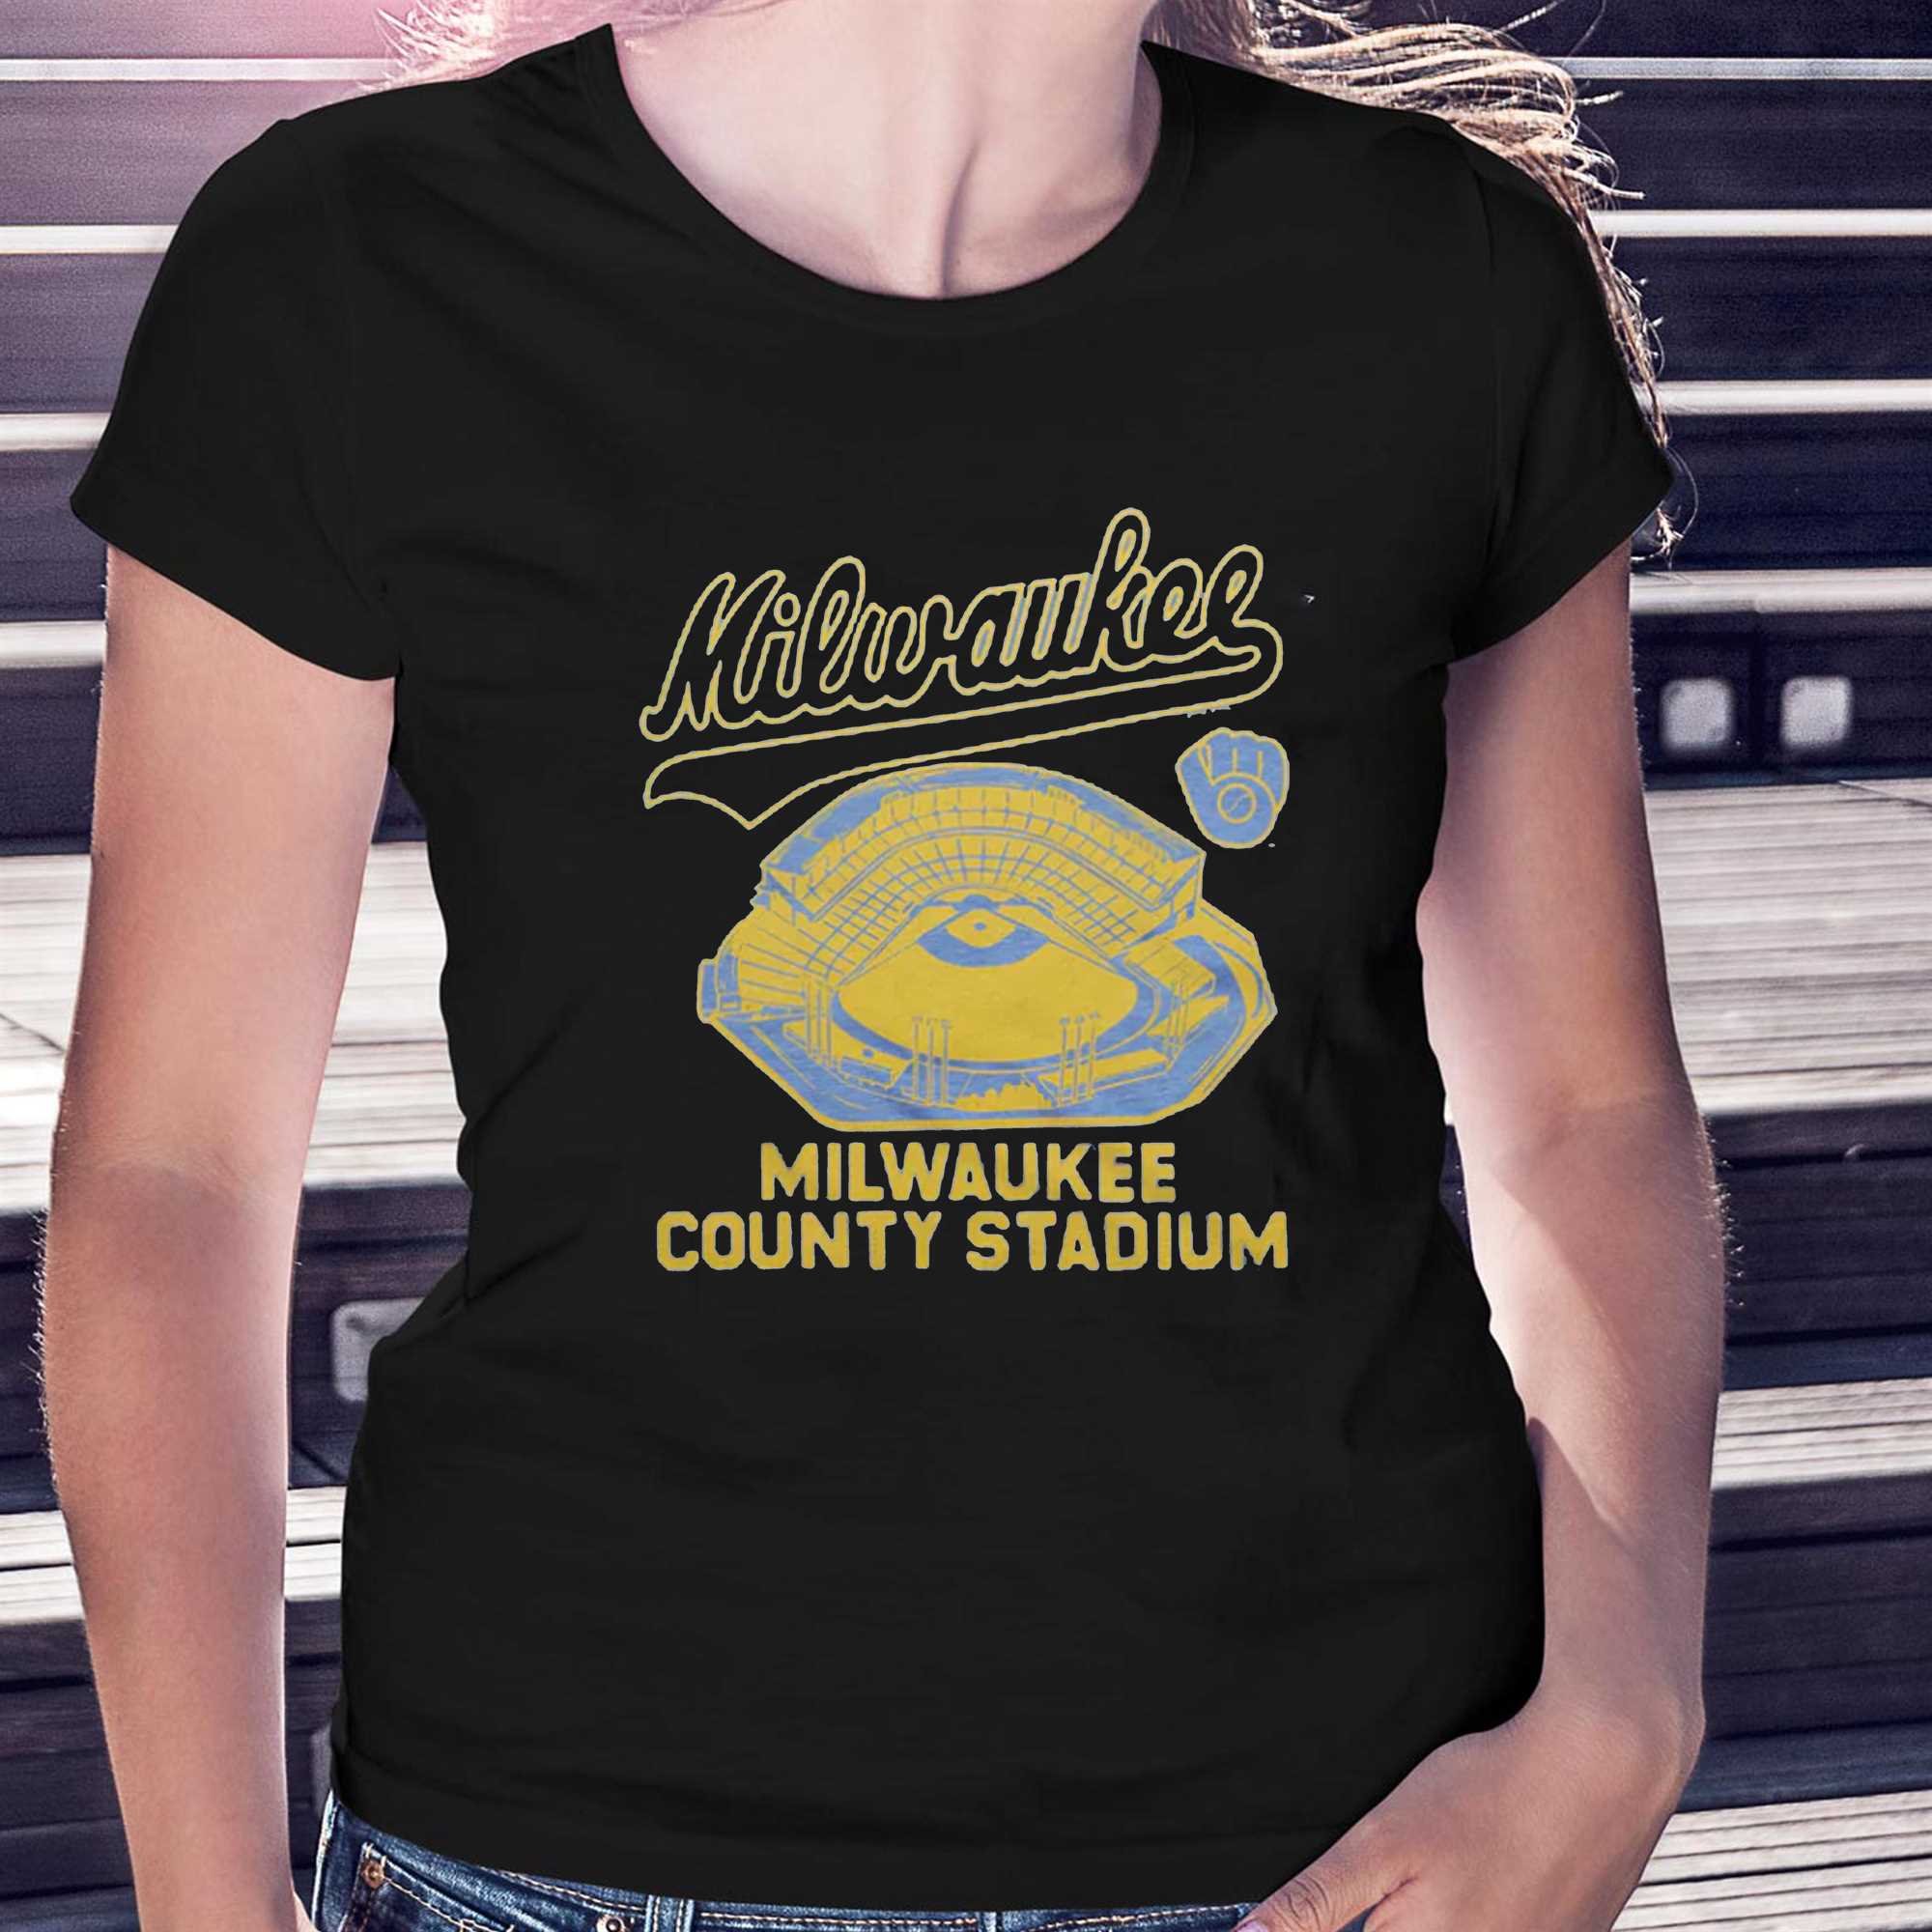 Detroit Tigers Comerica Park T-shirt - Shibtee Clothing